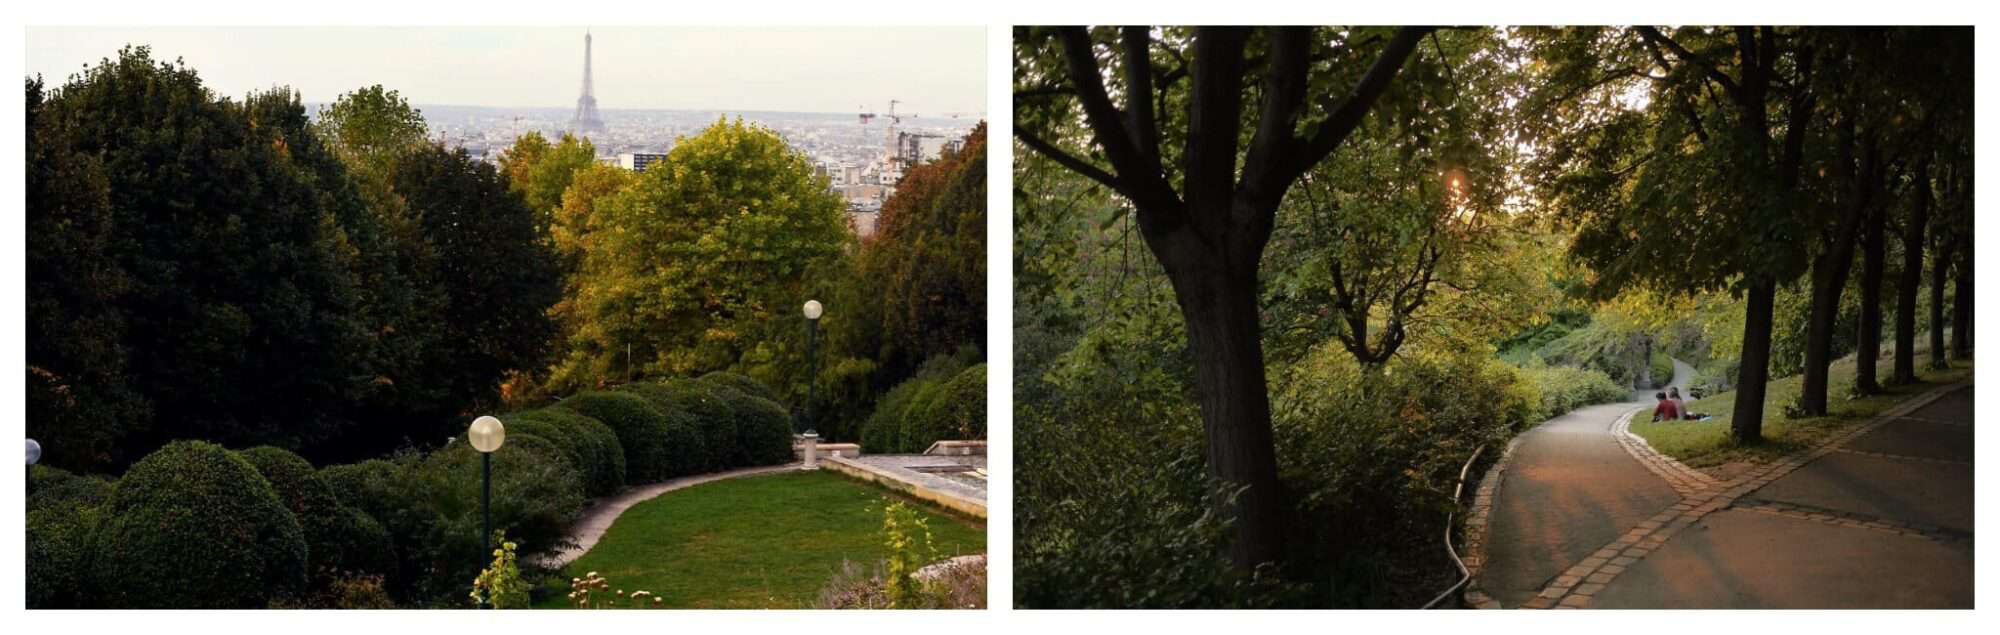 Left: Parc de Belleville in Paris and its city views with the Eiffel Tower; Right: A couple picnics in Parc de Belleville in Paris.